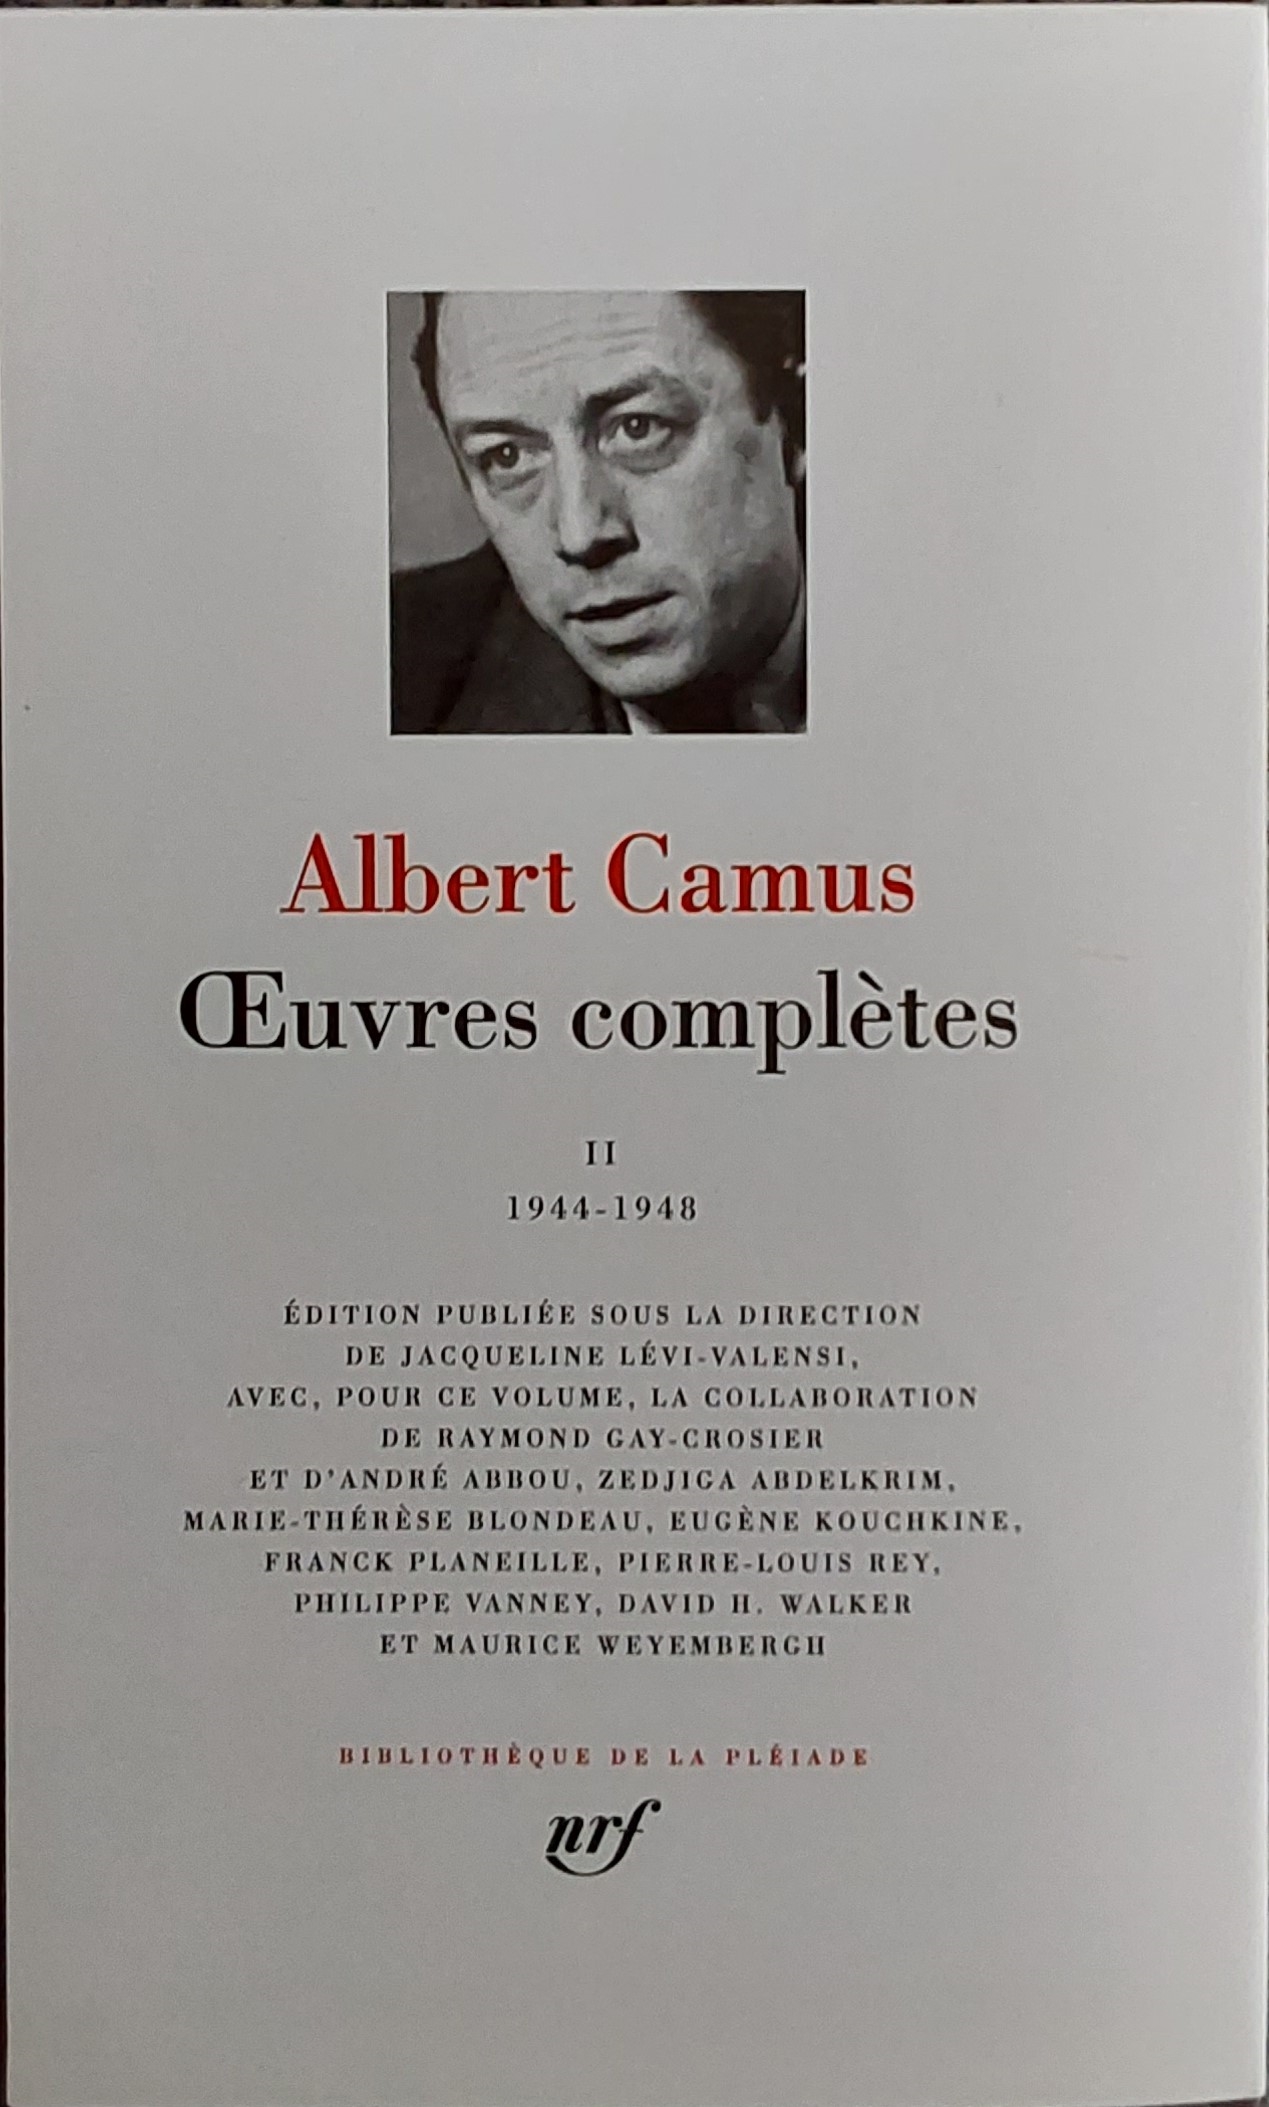 Albert Camus dans la bibliothèque de la Pléiade